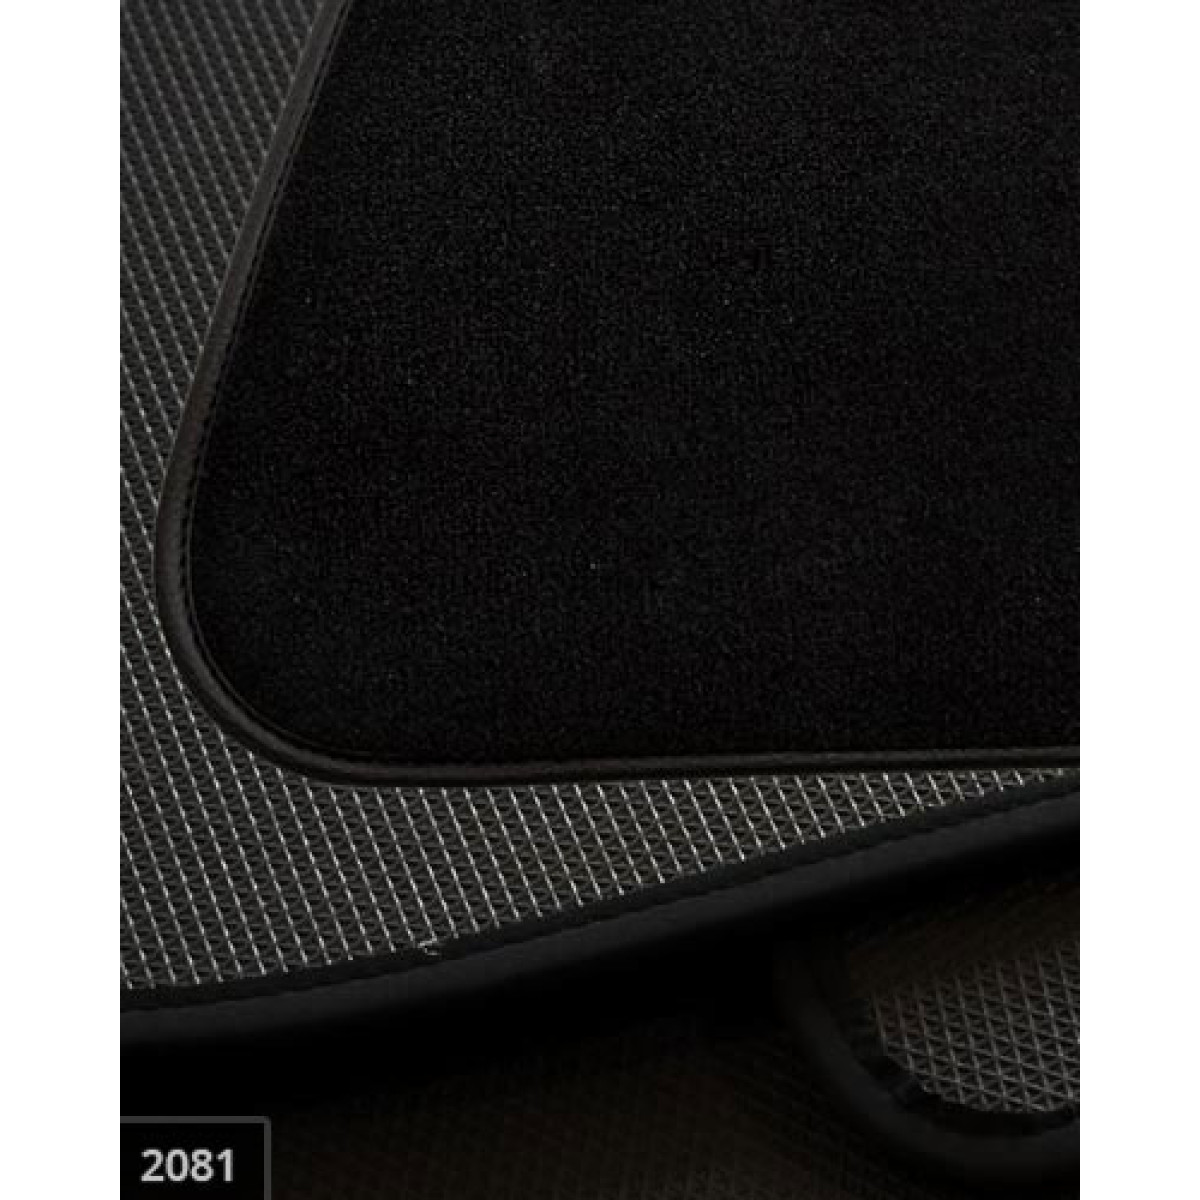 Medžiaginiai kilimėliai Seat Altea XL 2007-2015m.